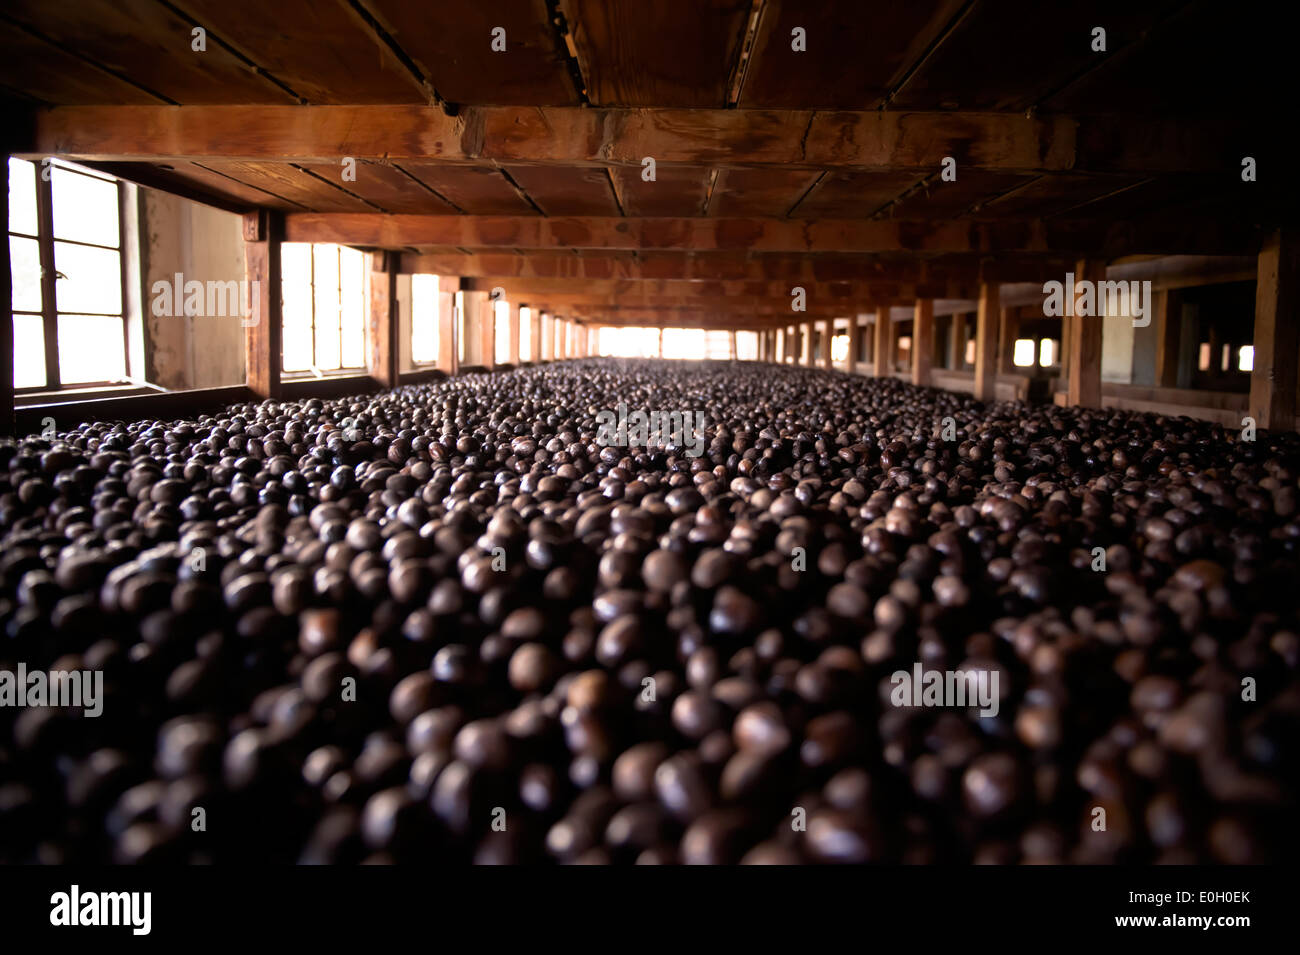 Nutmegs laid out for drying, Caribbean nutmeg plantation, Caribbean Stock Photo